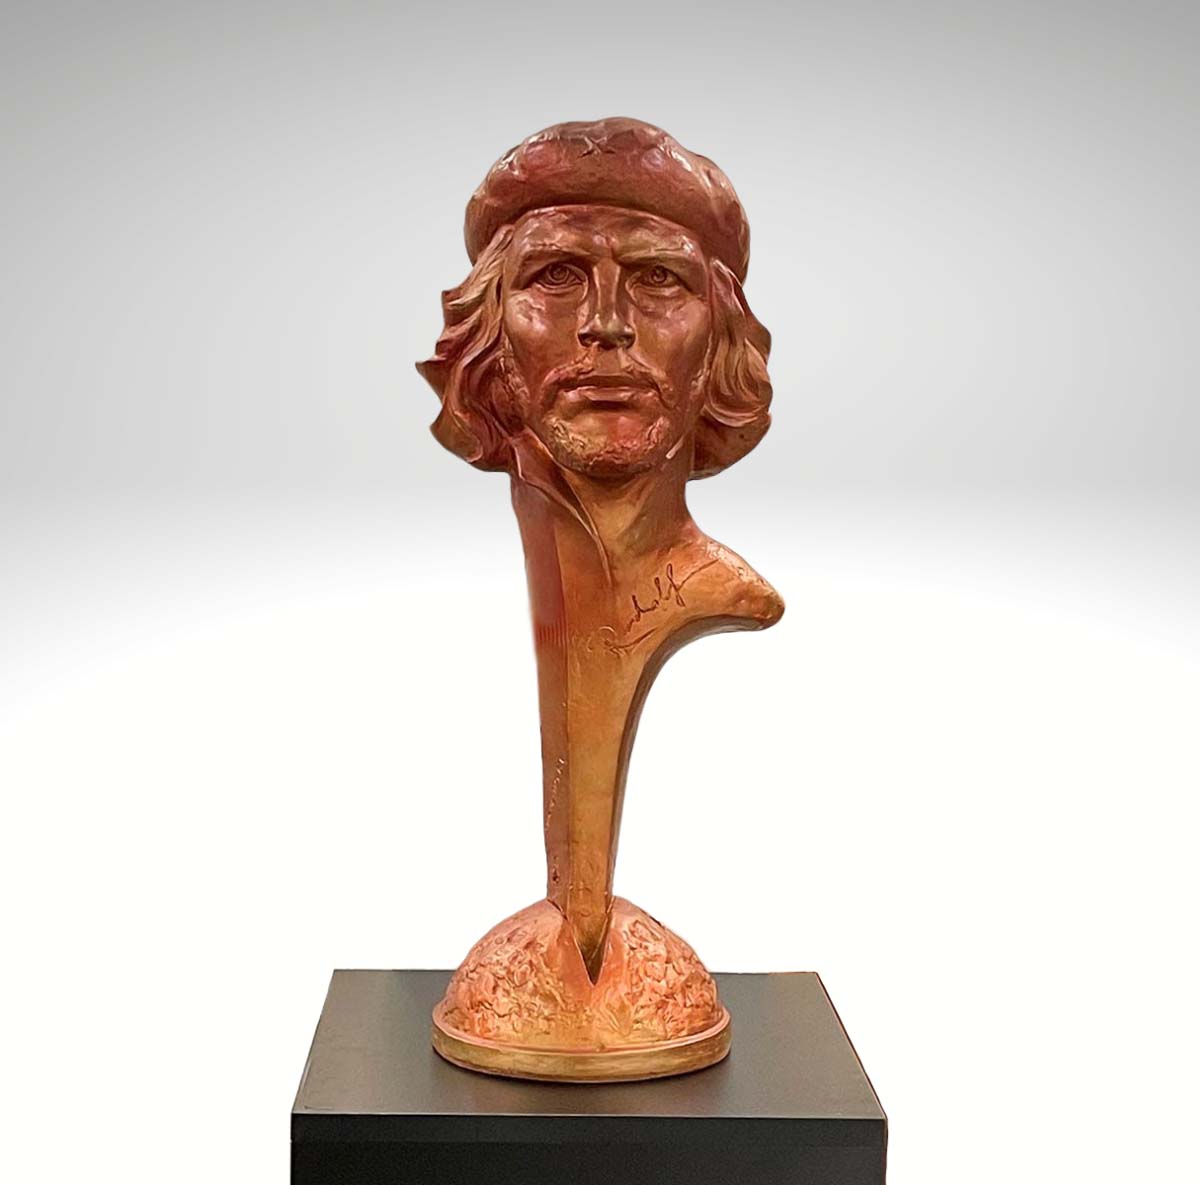 Contemporary Sculpture. Title: Che Guevara, Hydrostone, 26 inches by Canadian artist Rudolf Sokolovski.